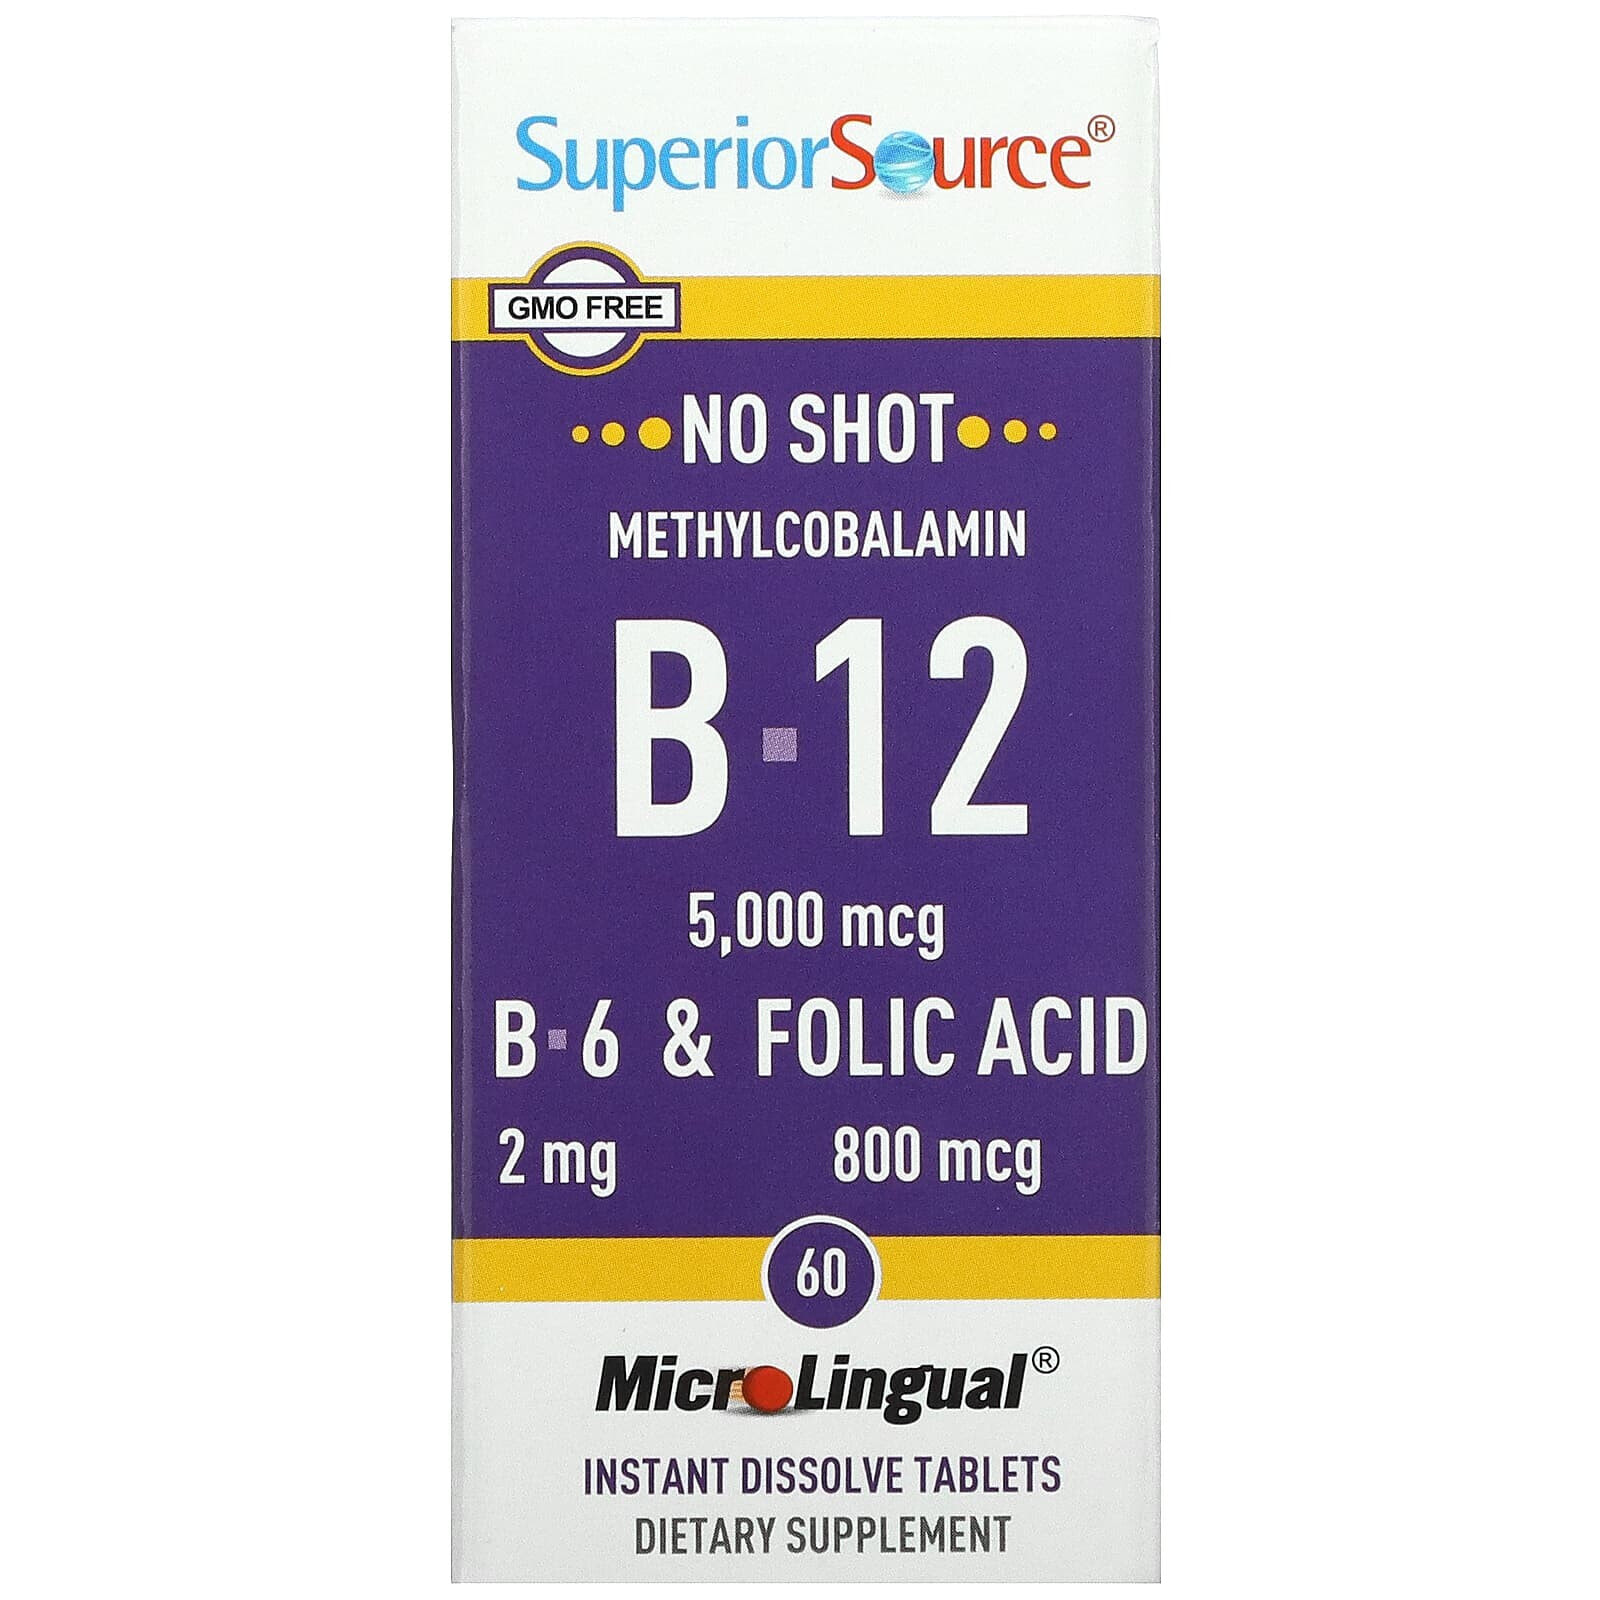 Methylcobalamin B-12, B-6 & Folic Acid, 5,000 mcg, 60 MicroLingual Instant Dissolve Tablets